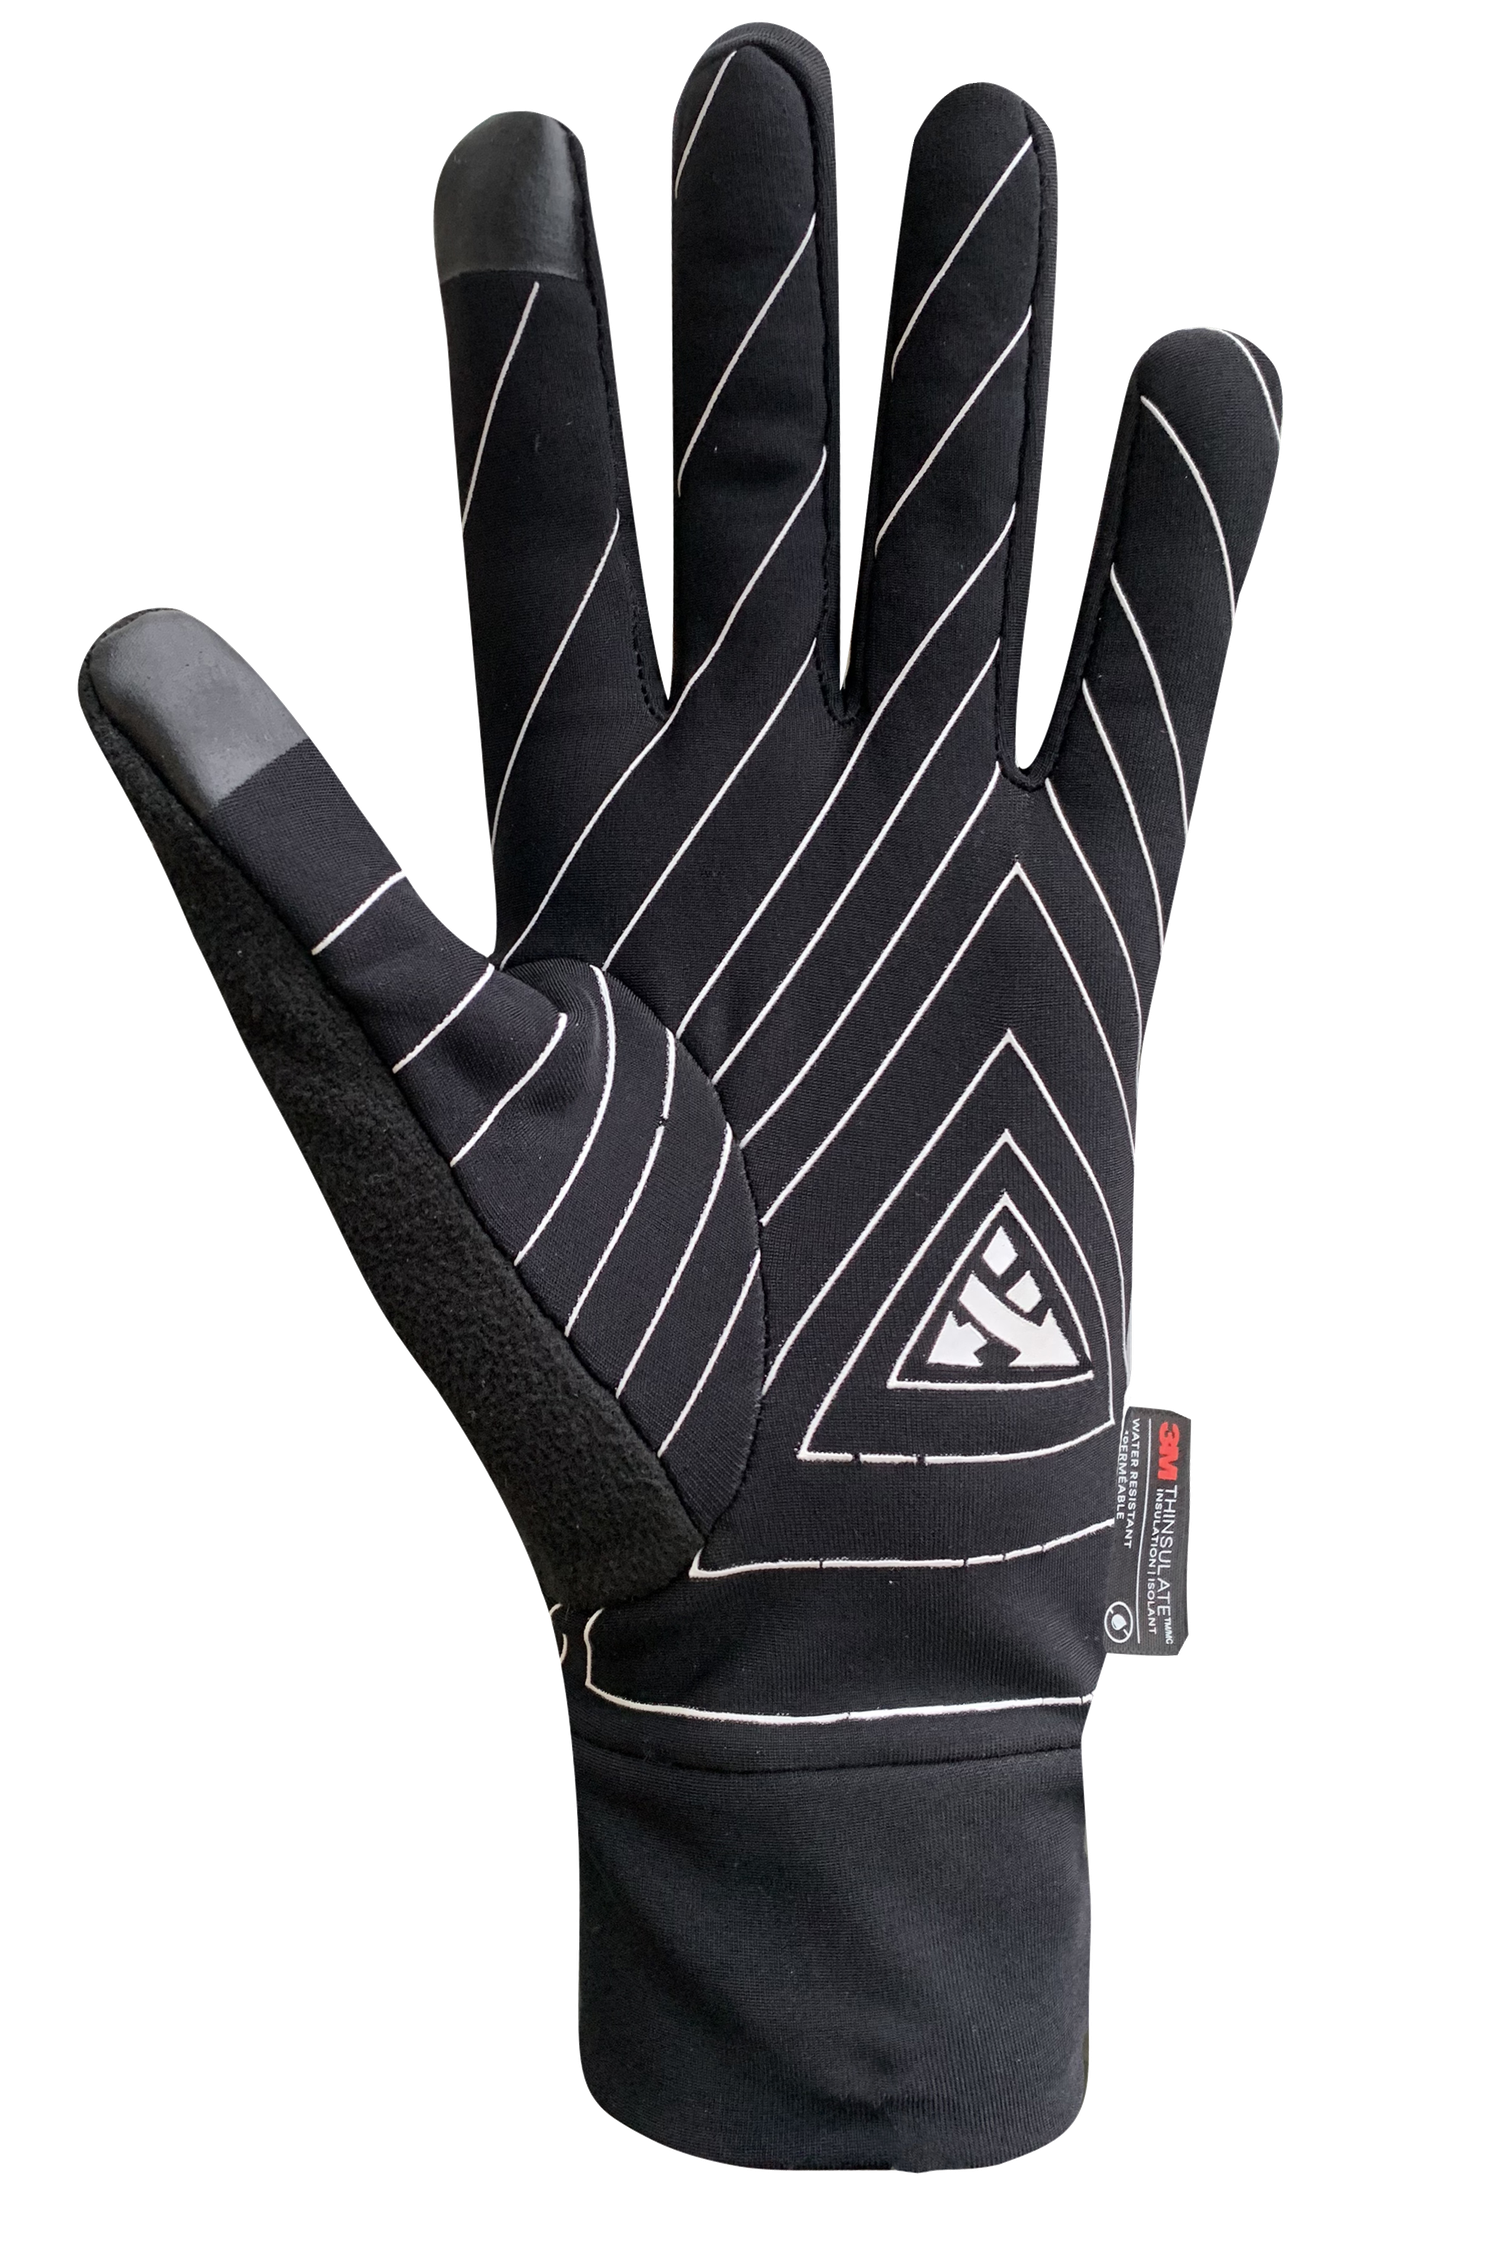 Impulse 2 Running Gloves - Adult, Black